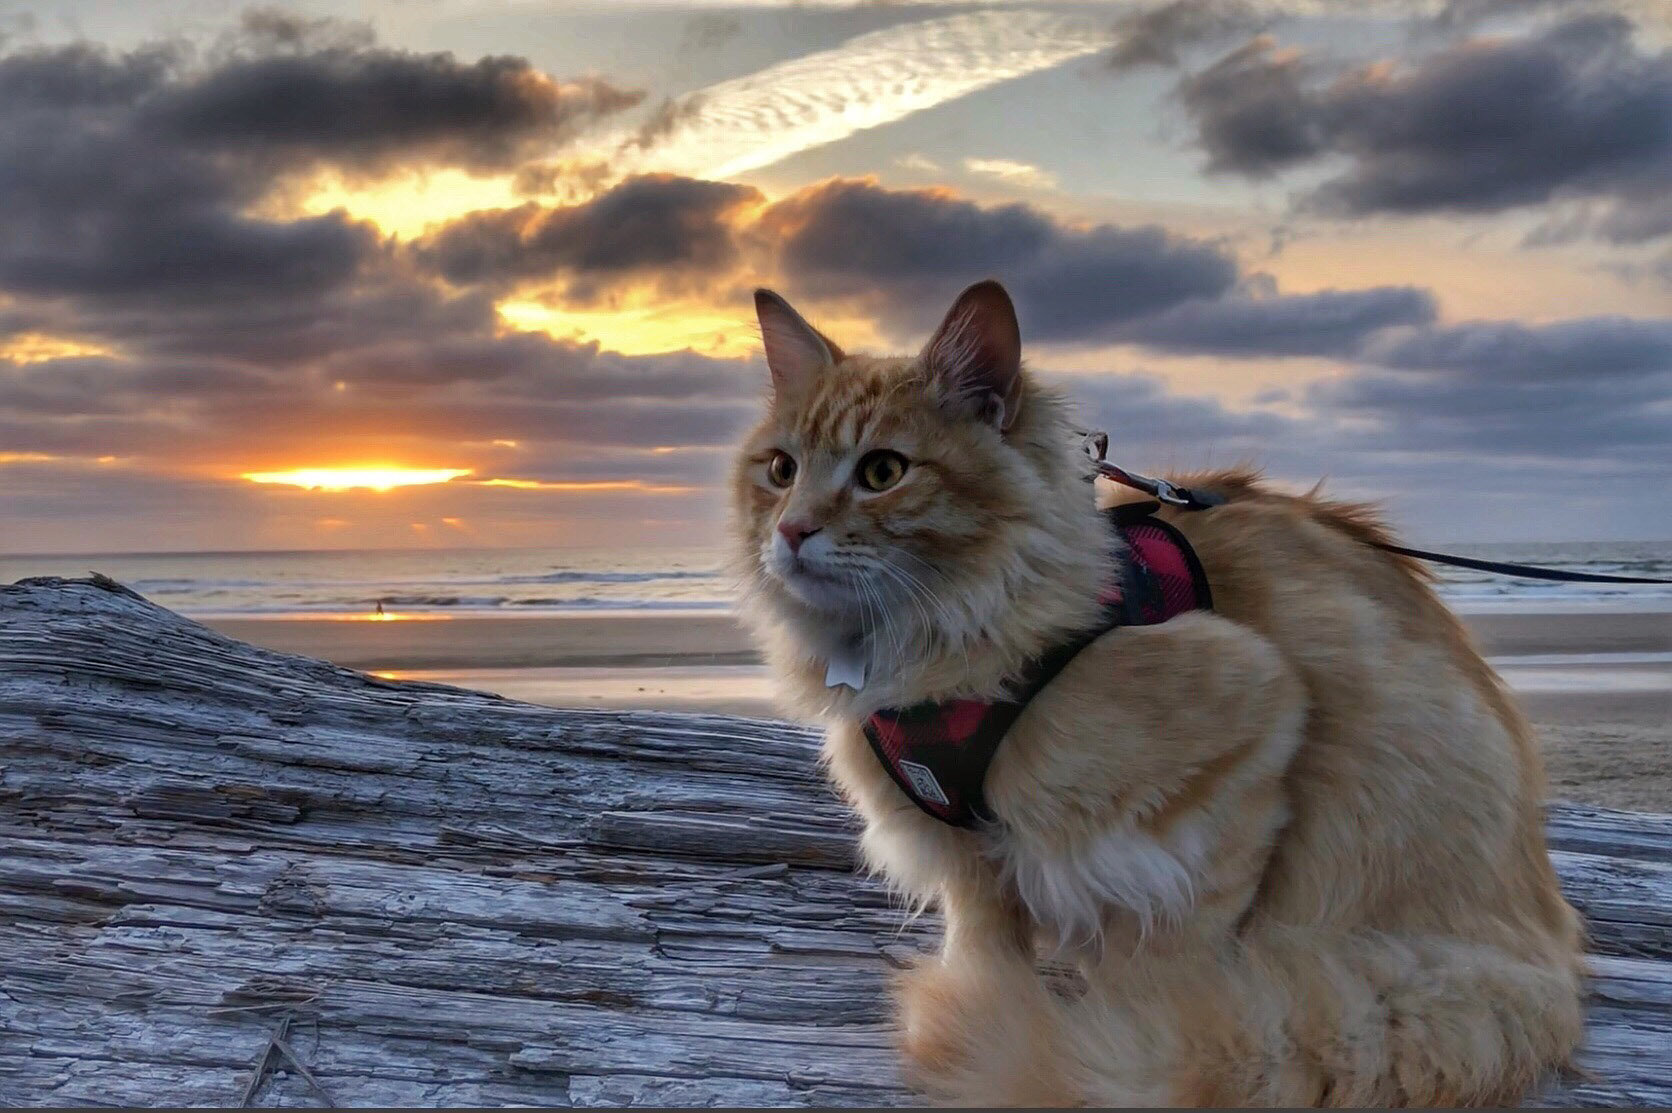 adventure cat on beach at sunset